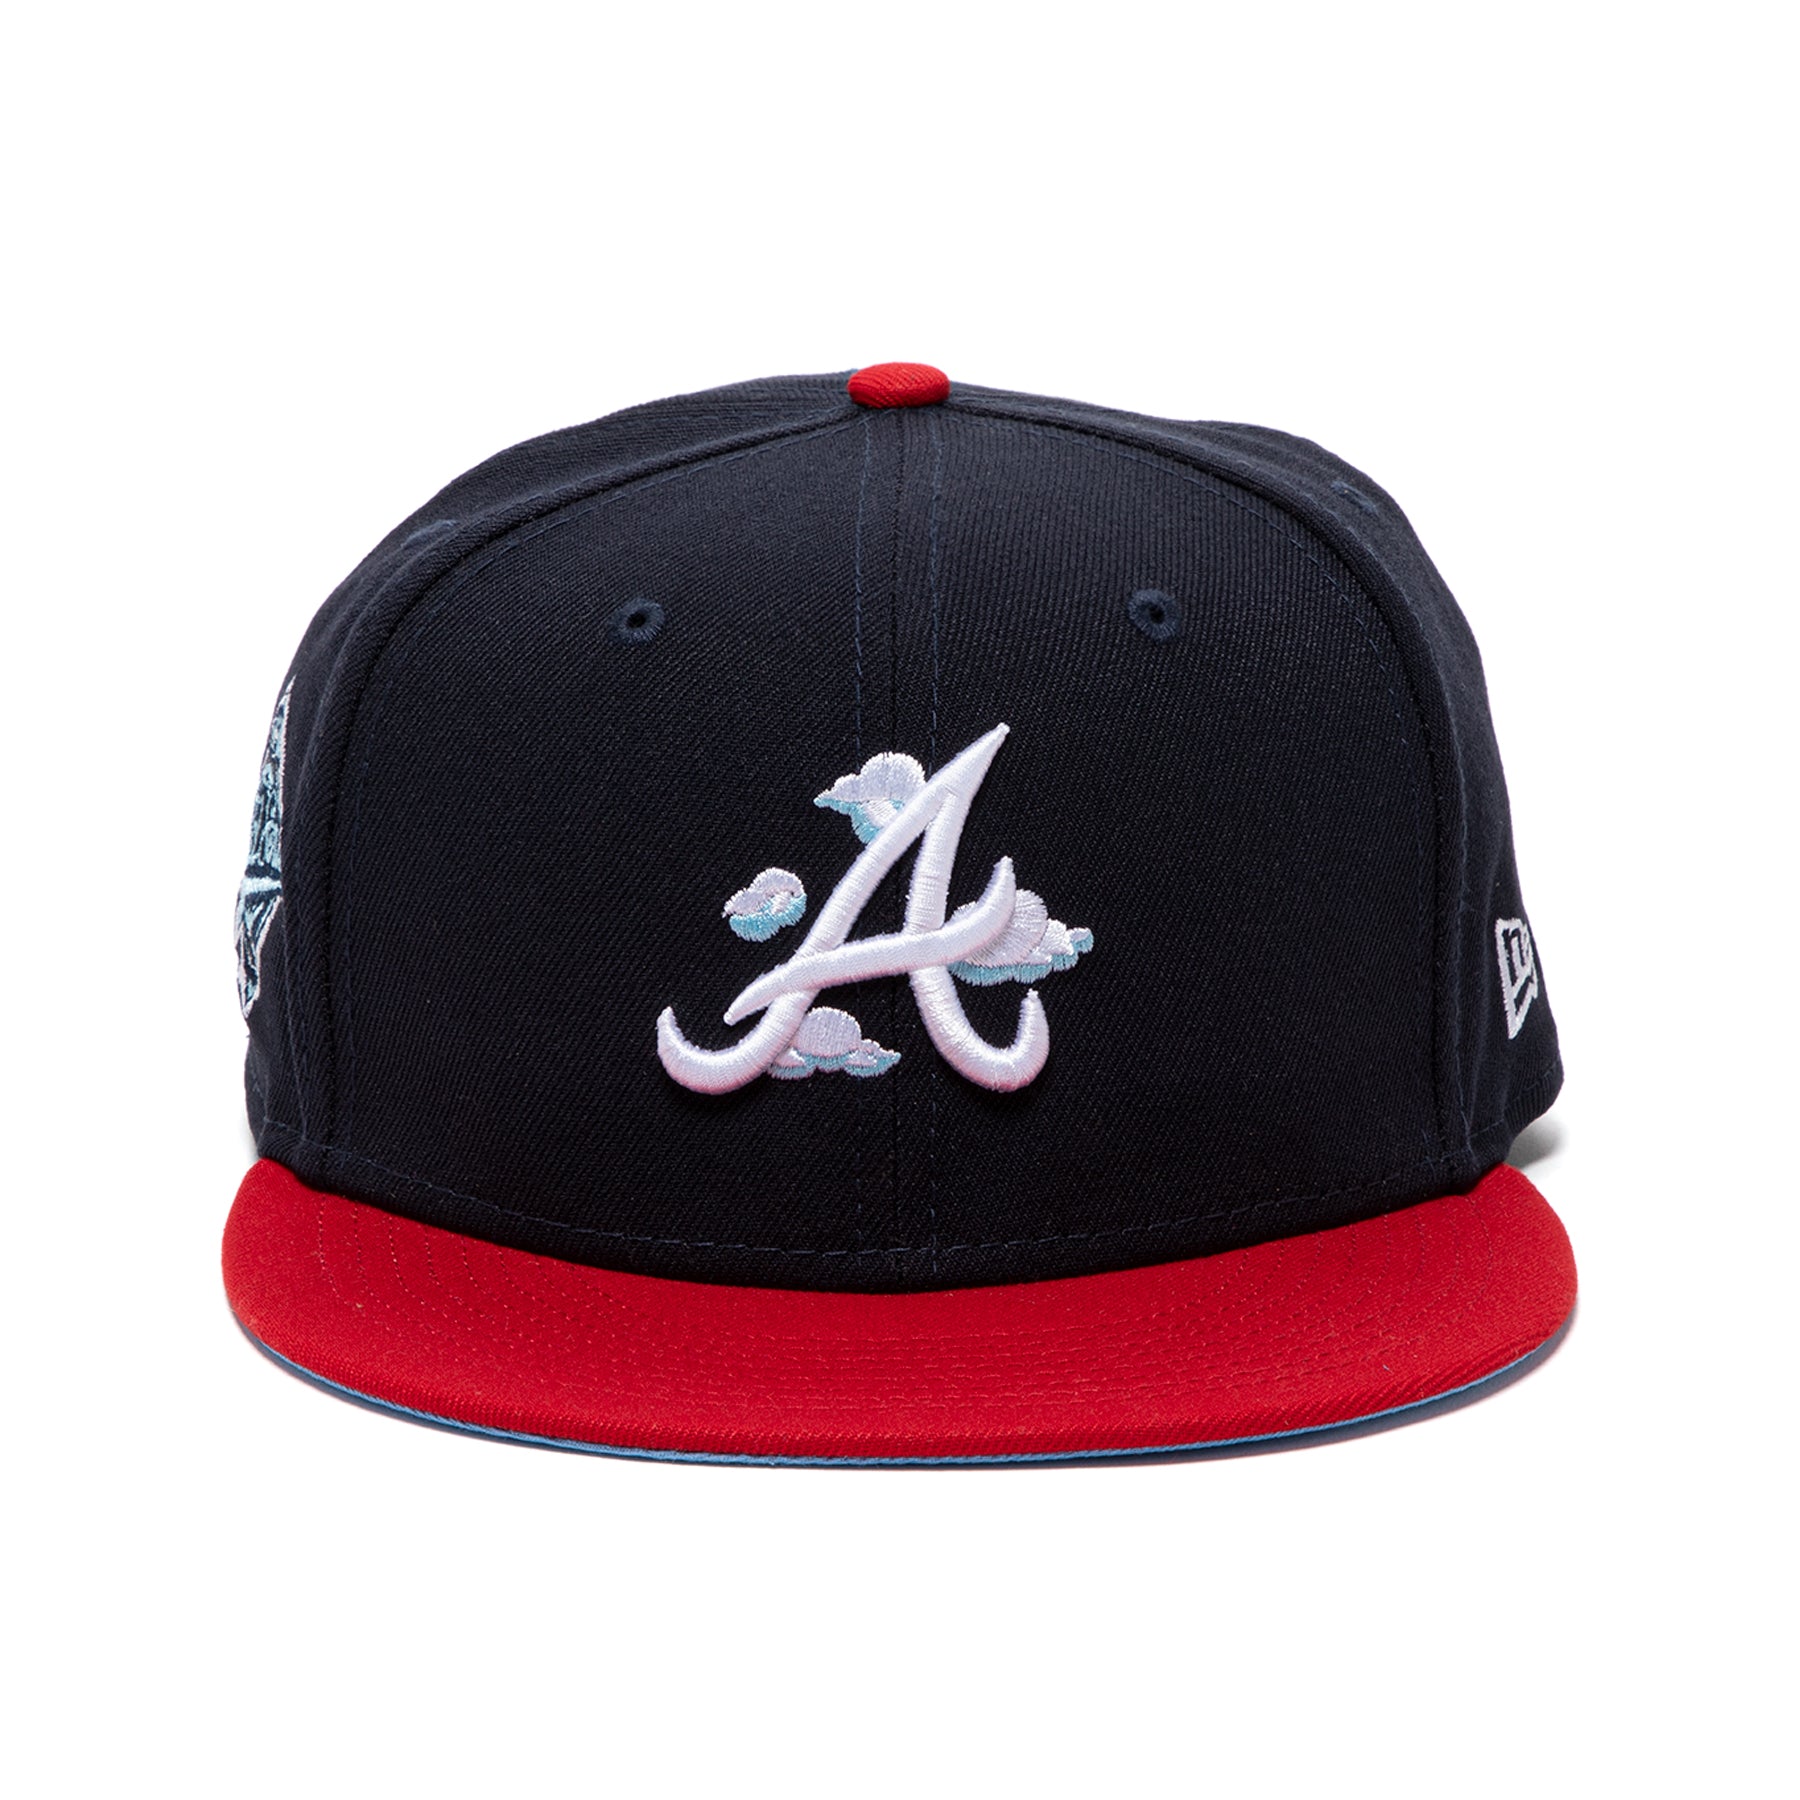 Atlanta Braves Sidepatch 9FIFTY Snapback Hat, Blue, MLB by New Era